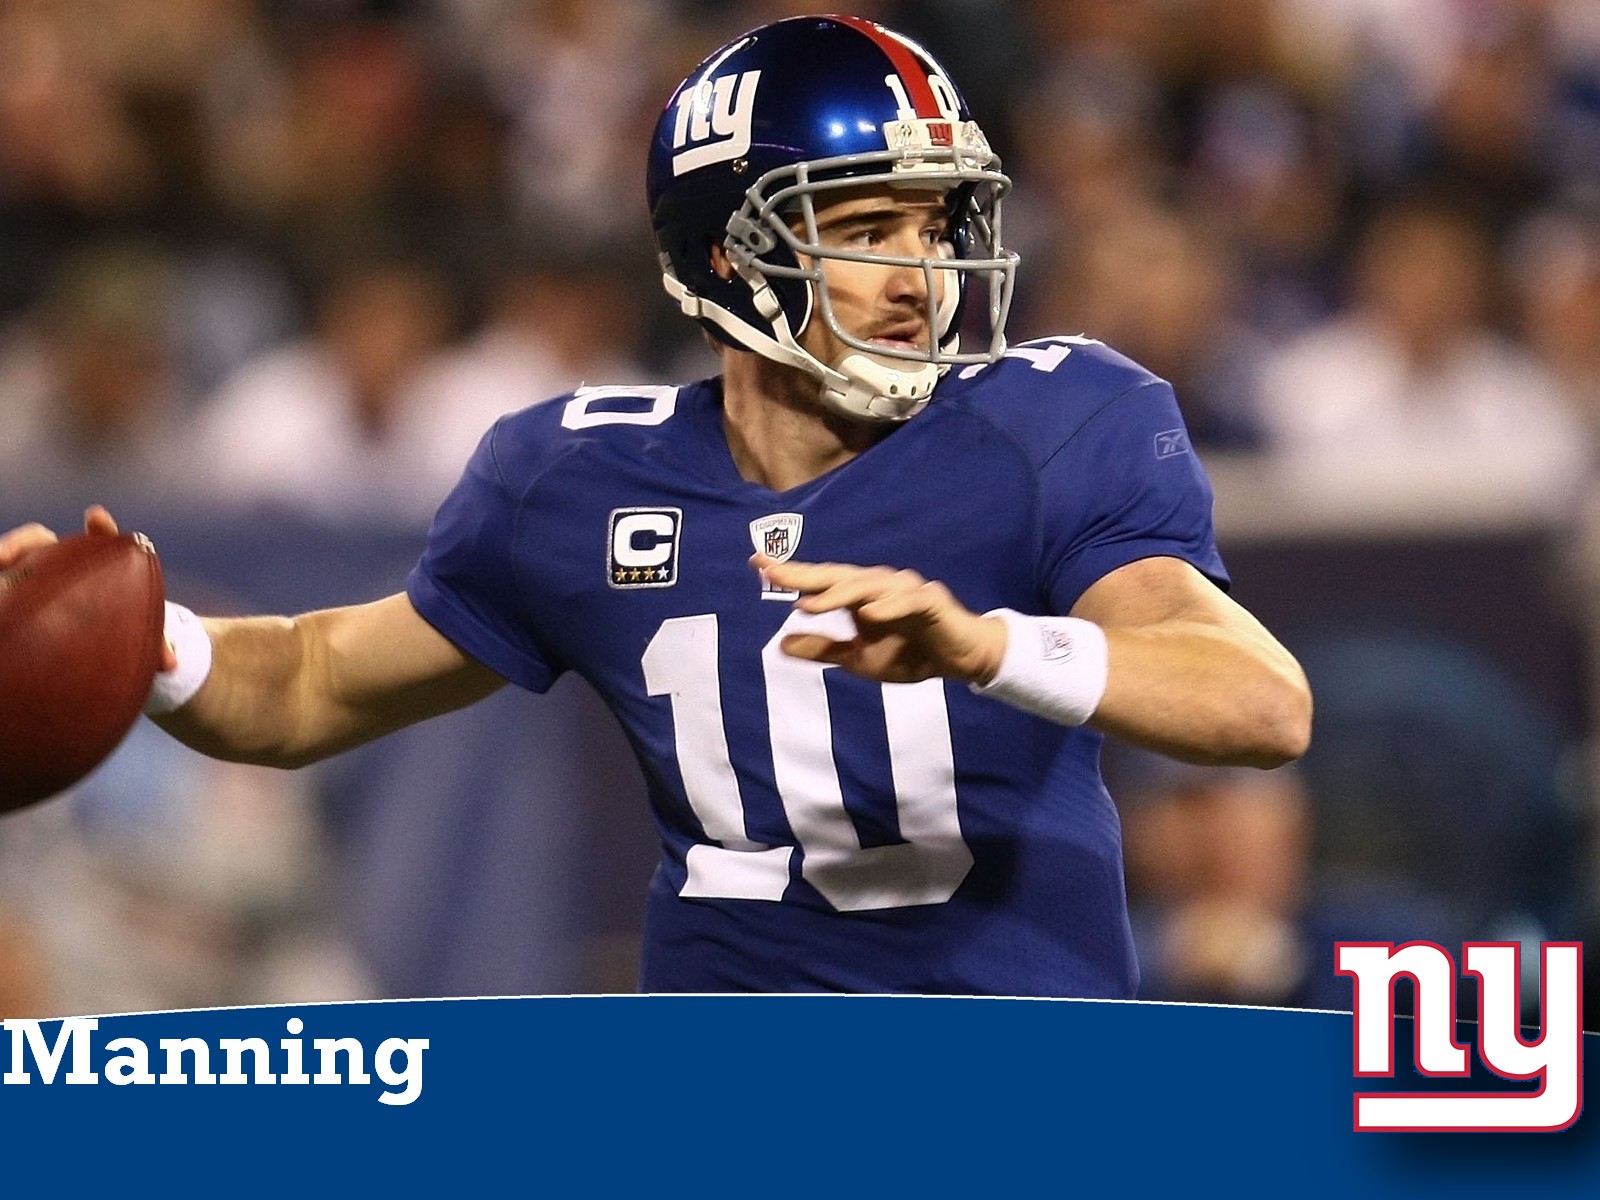 Nfl New York Giants Qb Eli Manning - Logos And Uniforms Of The New York Giants - HD Wallpaper 